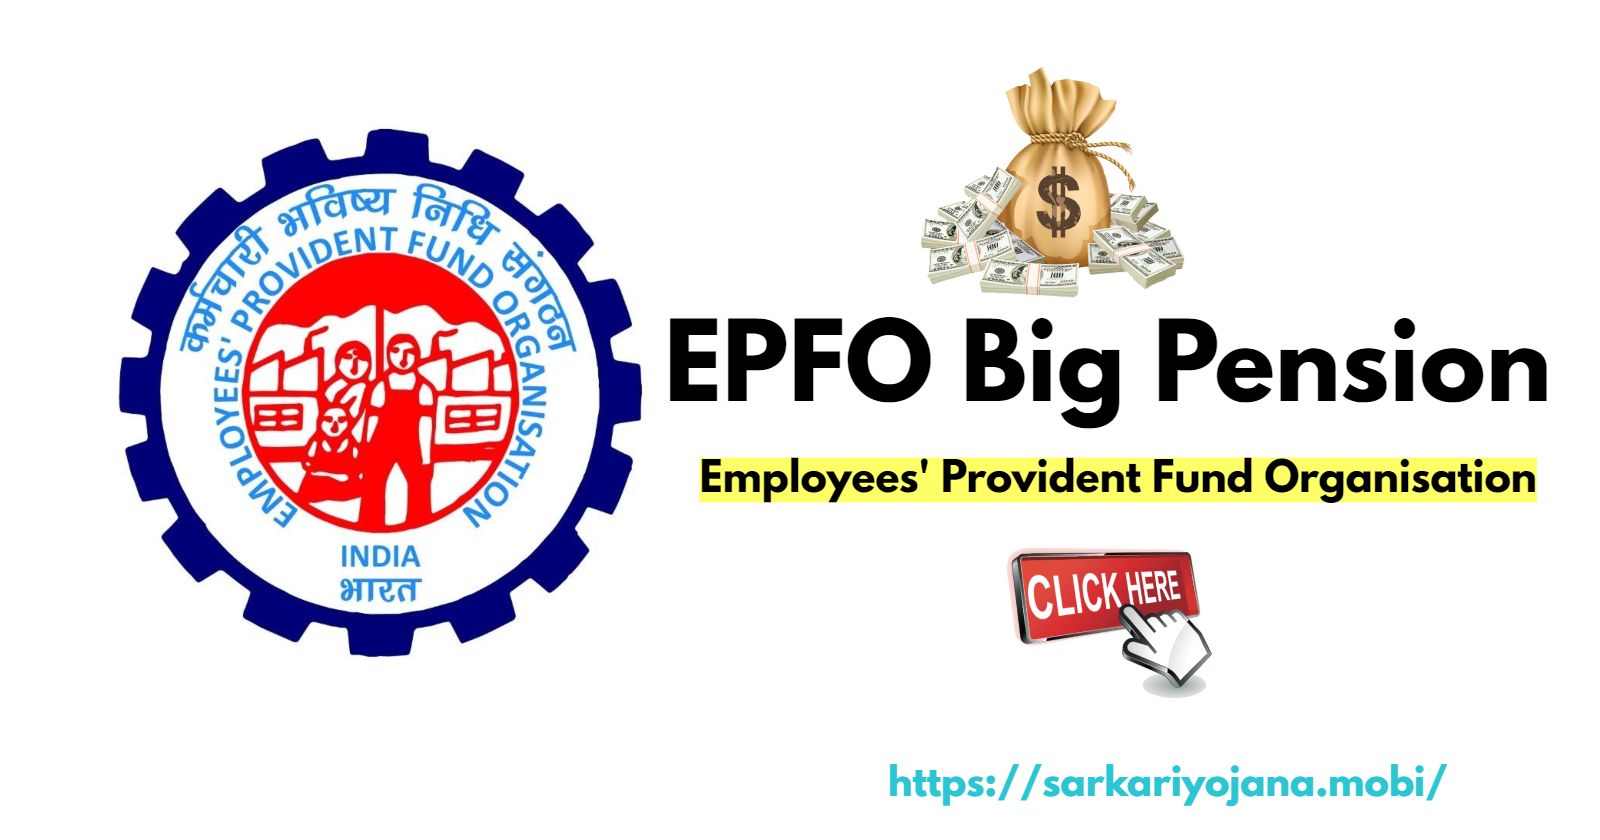 EPFO Big Pension